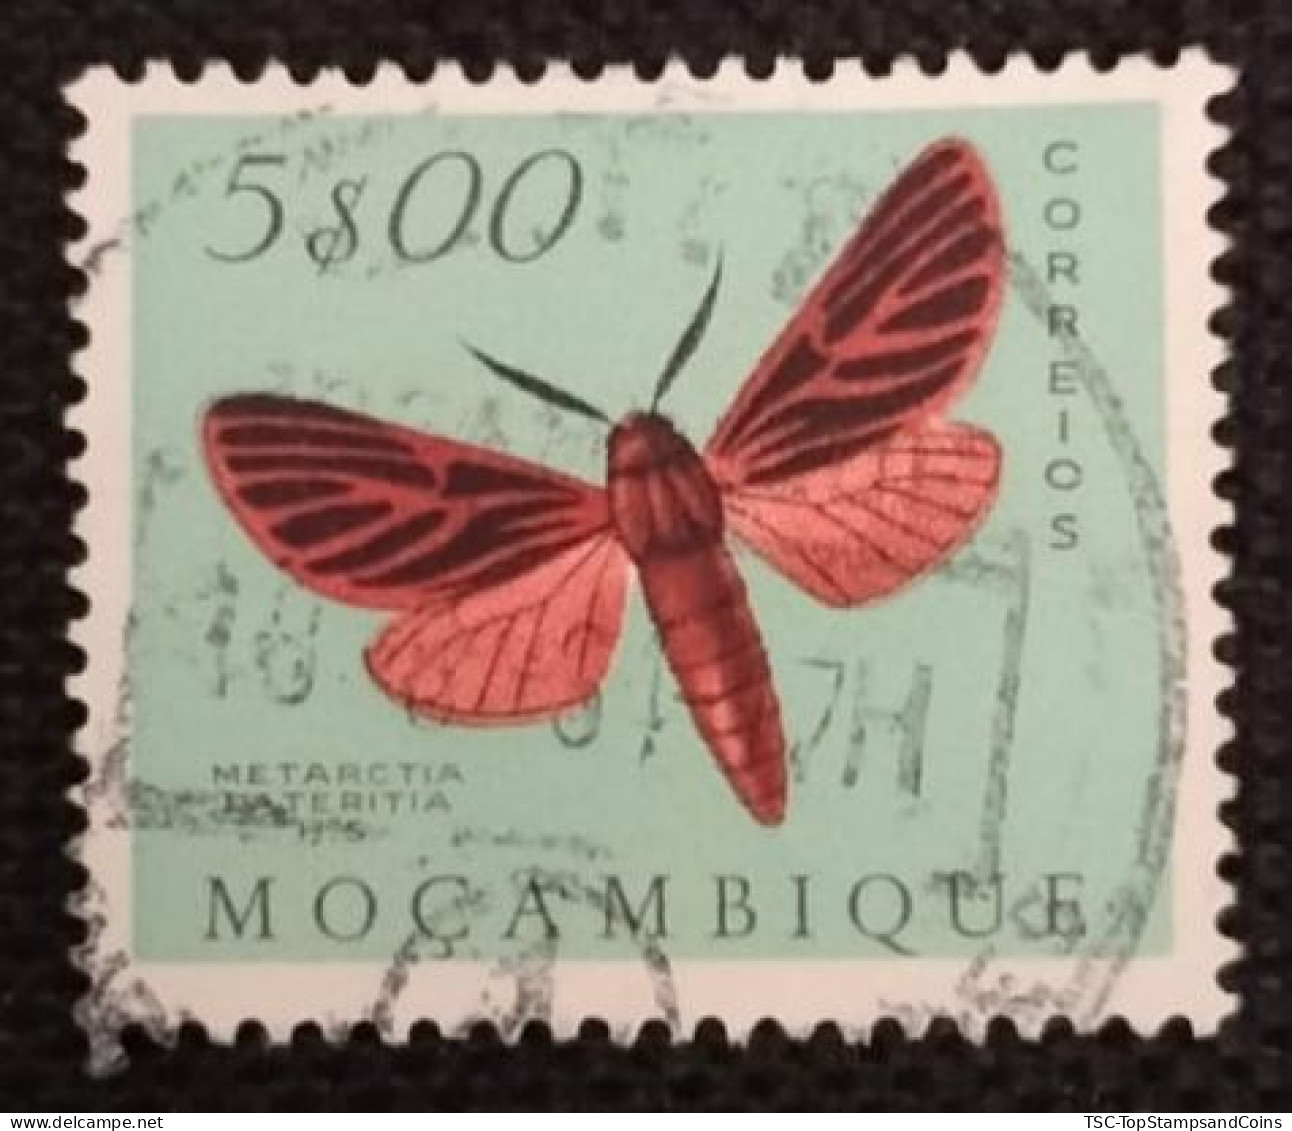 MOZPO0403U7 - Mozambique Butterflies  - 5$00 Used Stamp - Mozambique - 1953 - Mozambique